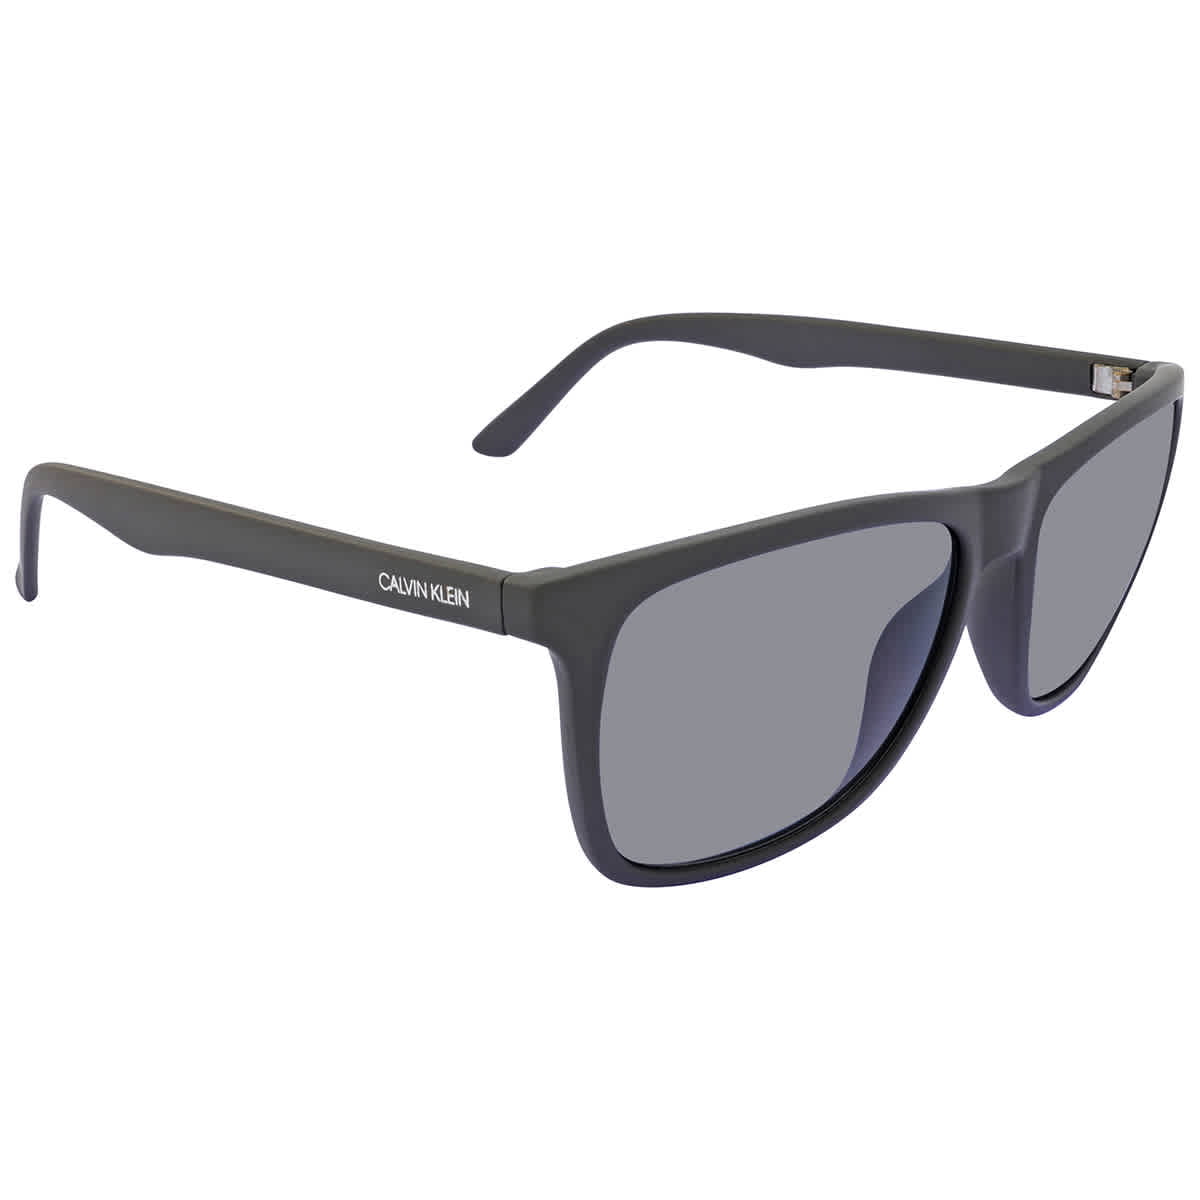 Calvin Klein Grey Square Men's Sunglasses CK20520S 020 57 